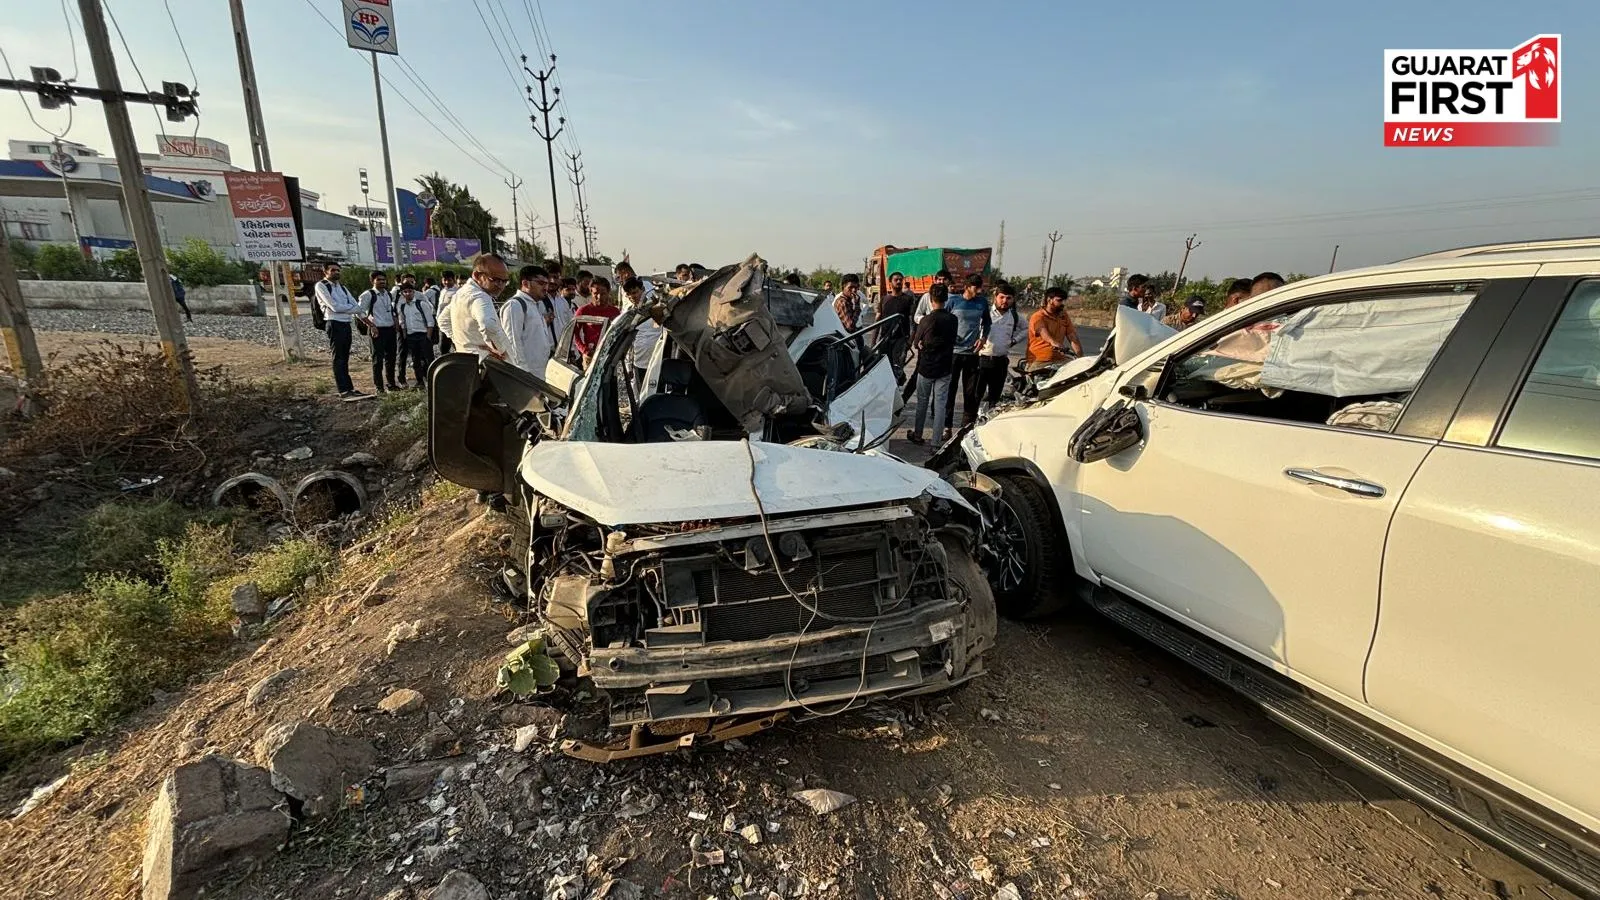 Accident on Gondal Rajkot National Highway